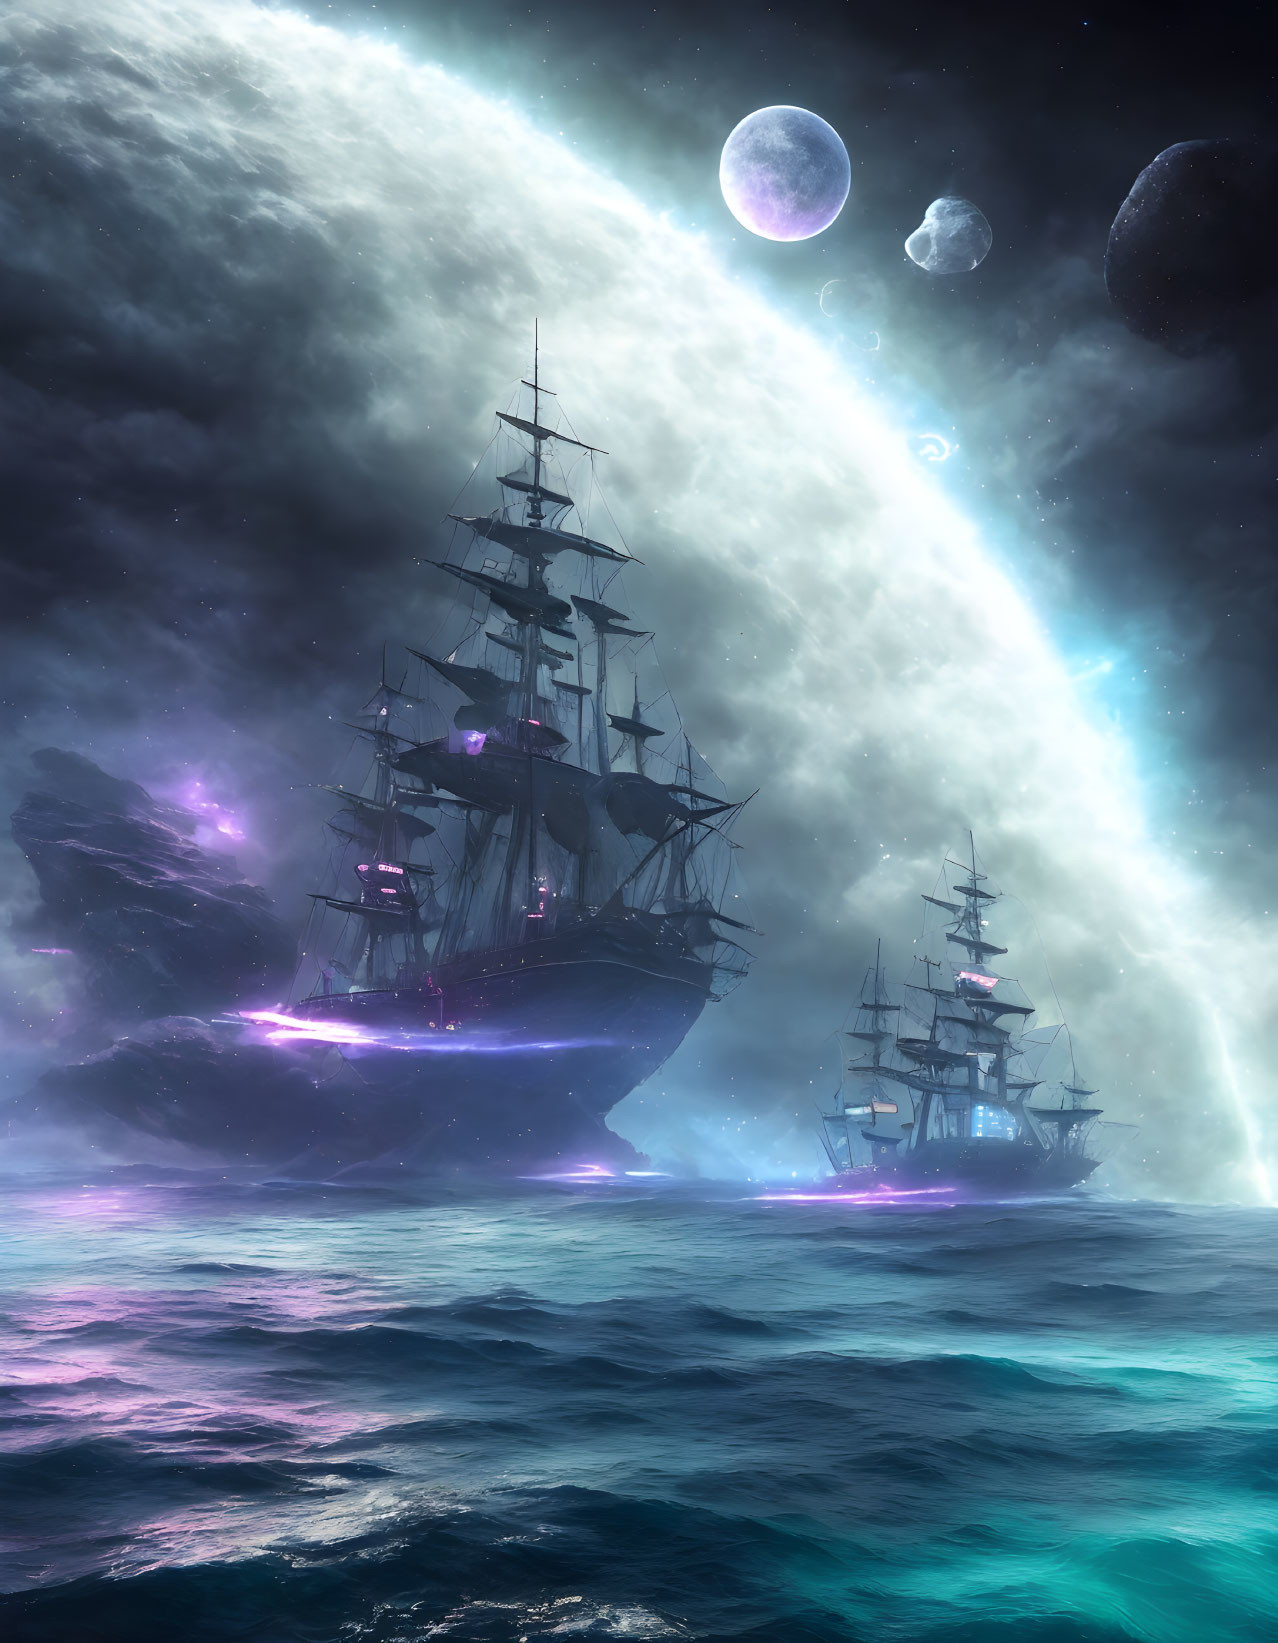   pirate ship